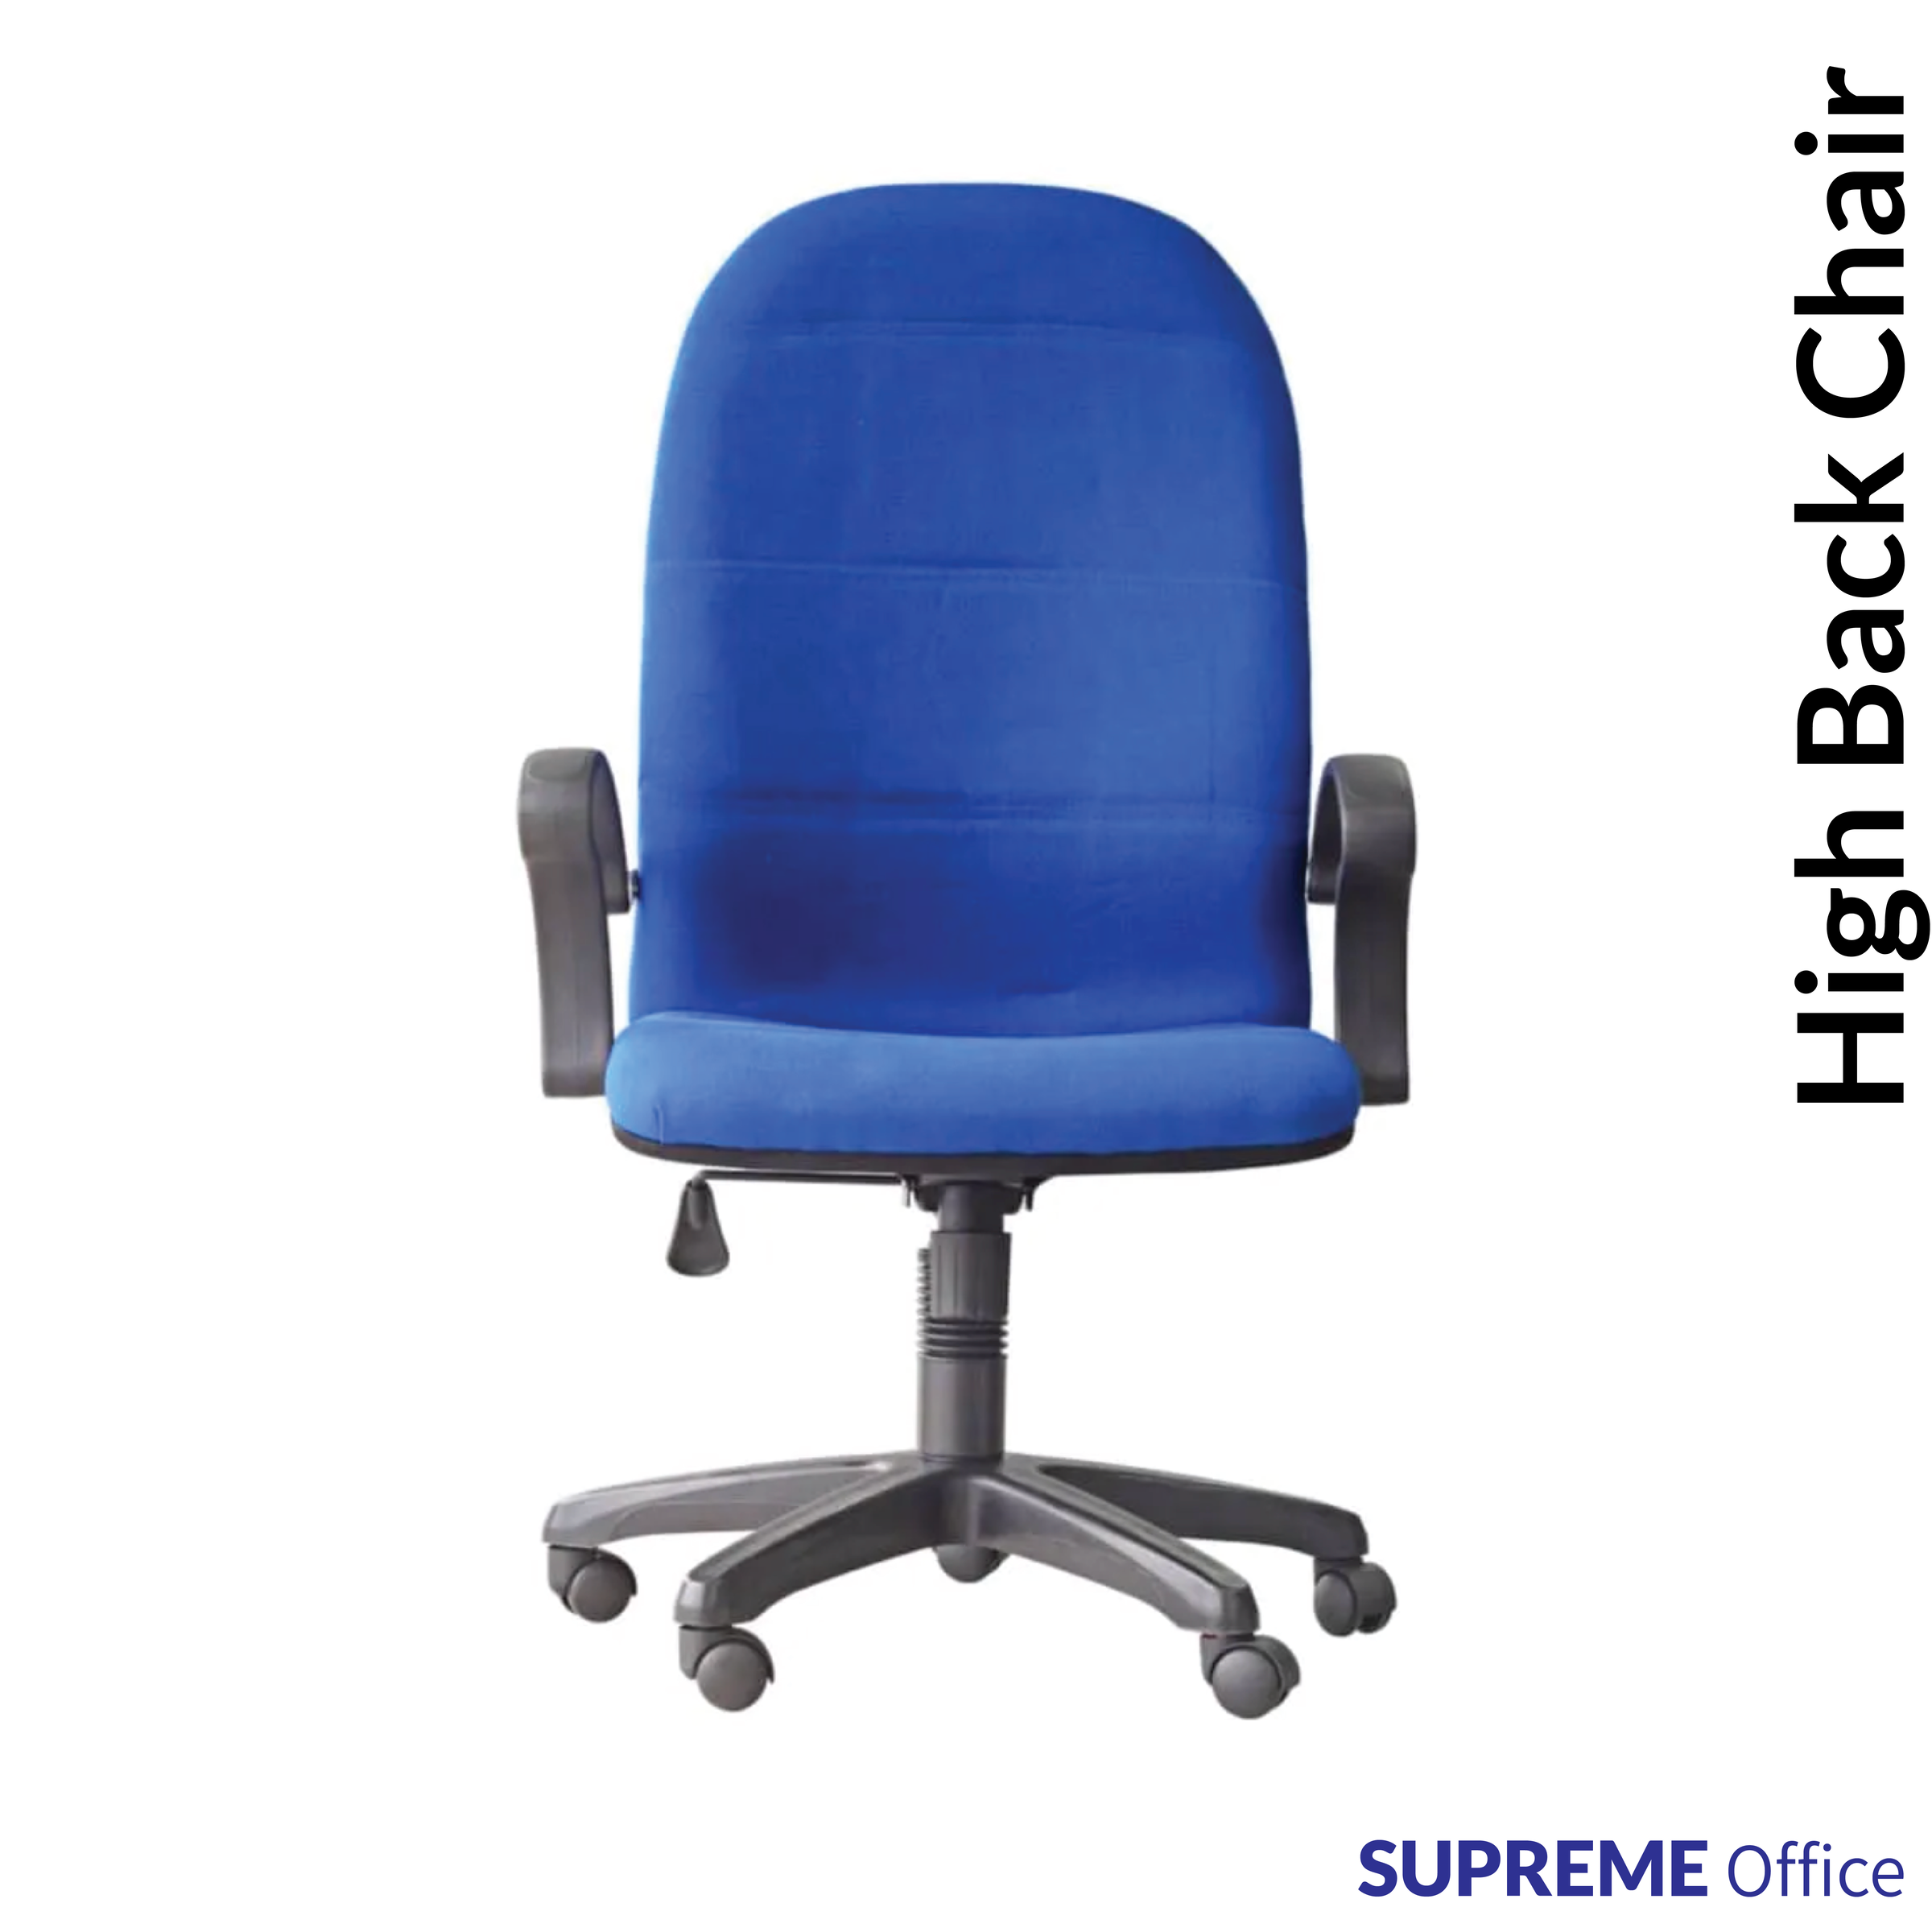 3v office chair-02